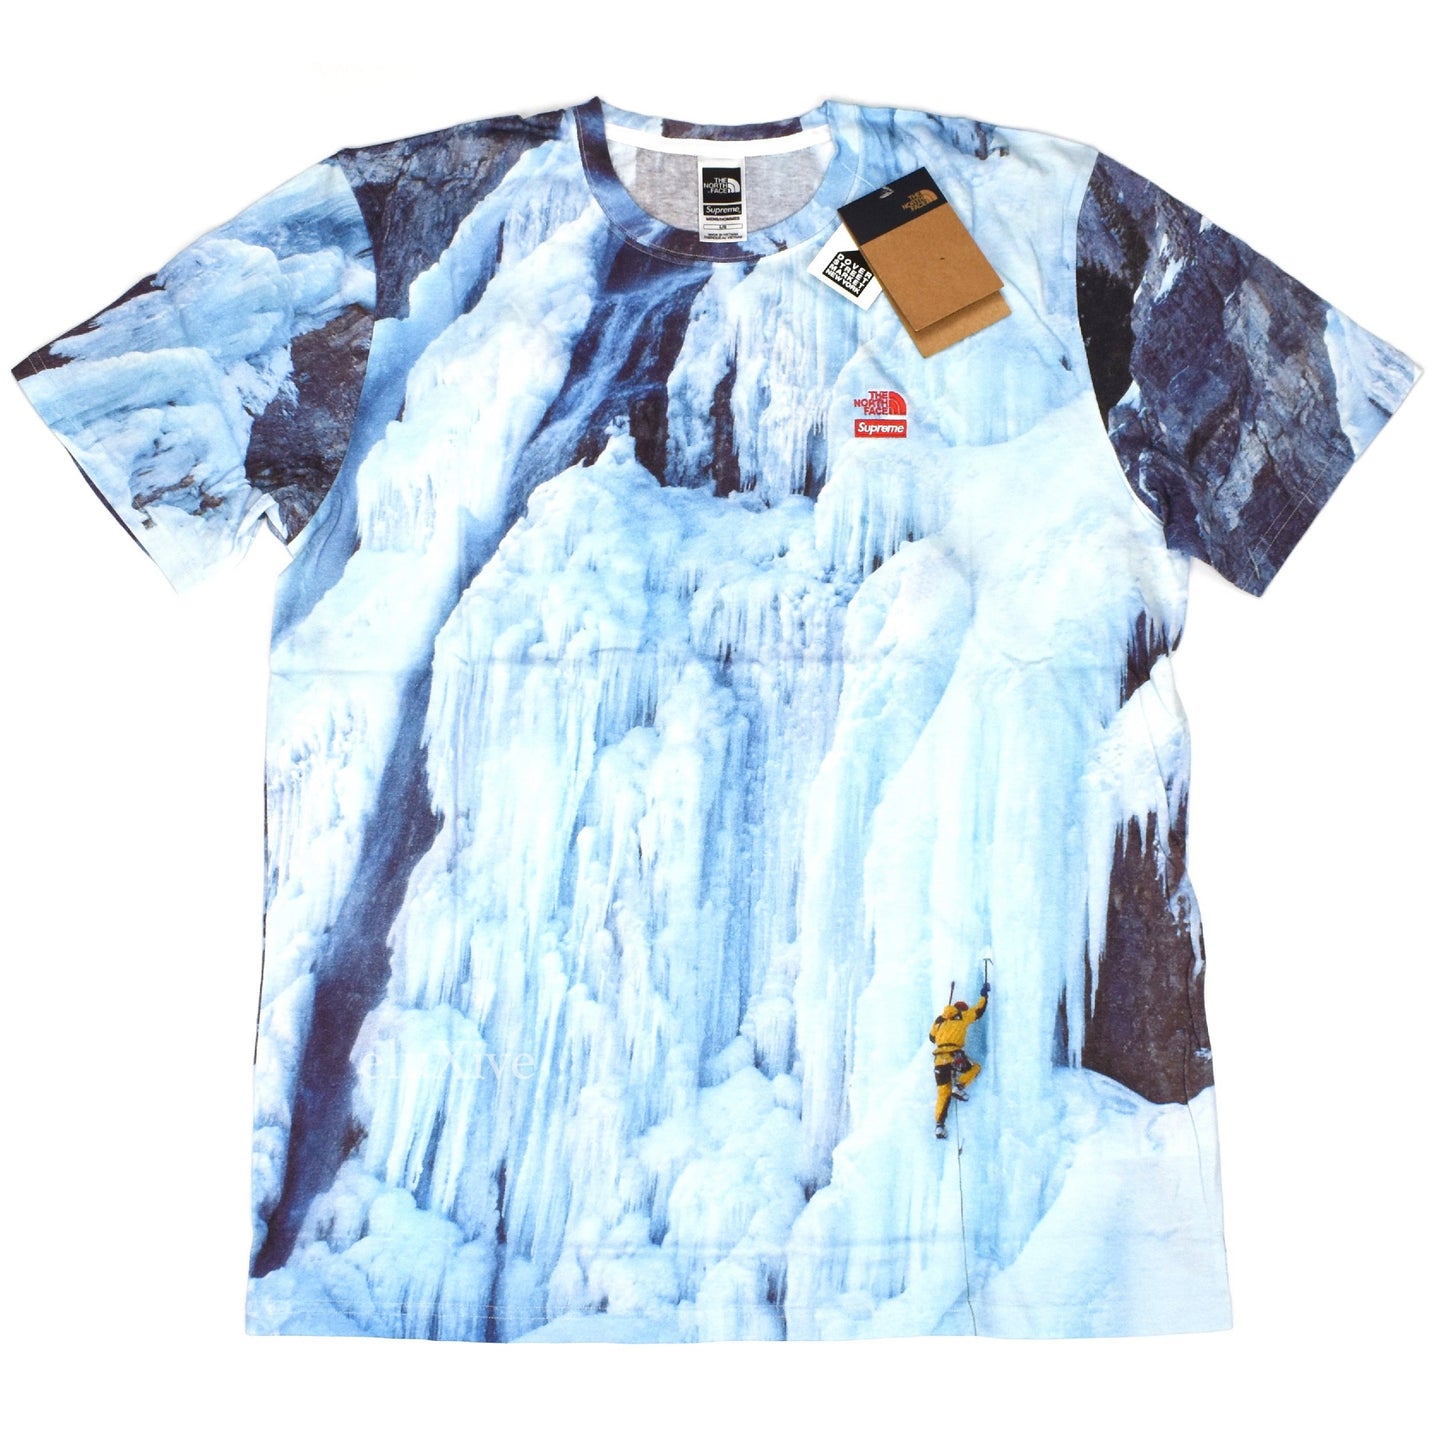 Supreme x The North Face - Ice Climb Print T-Shirt